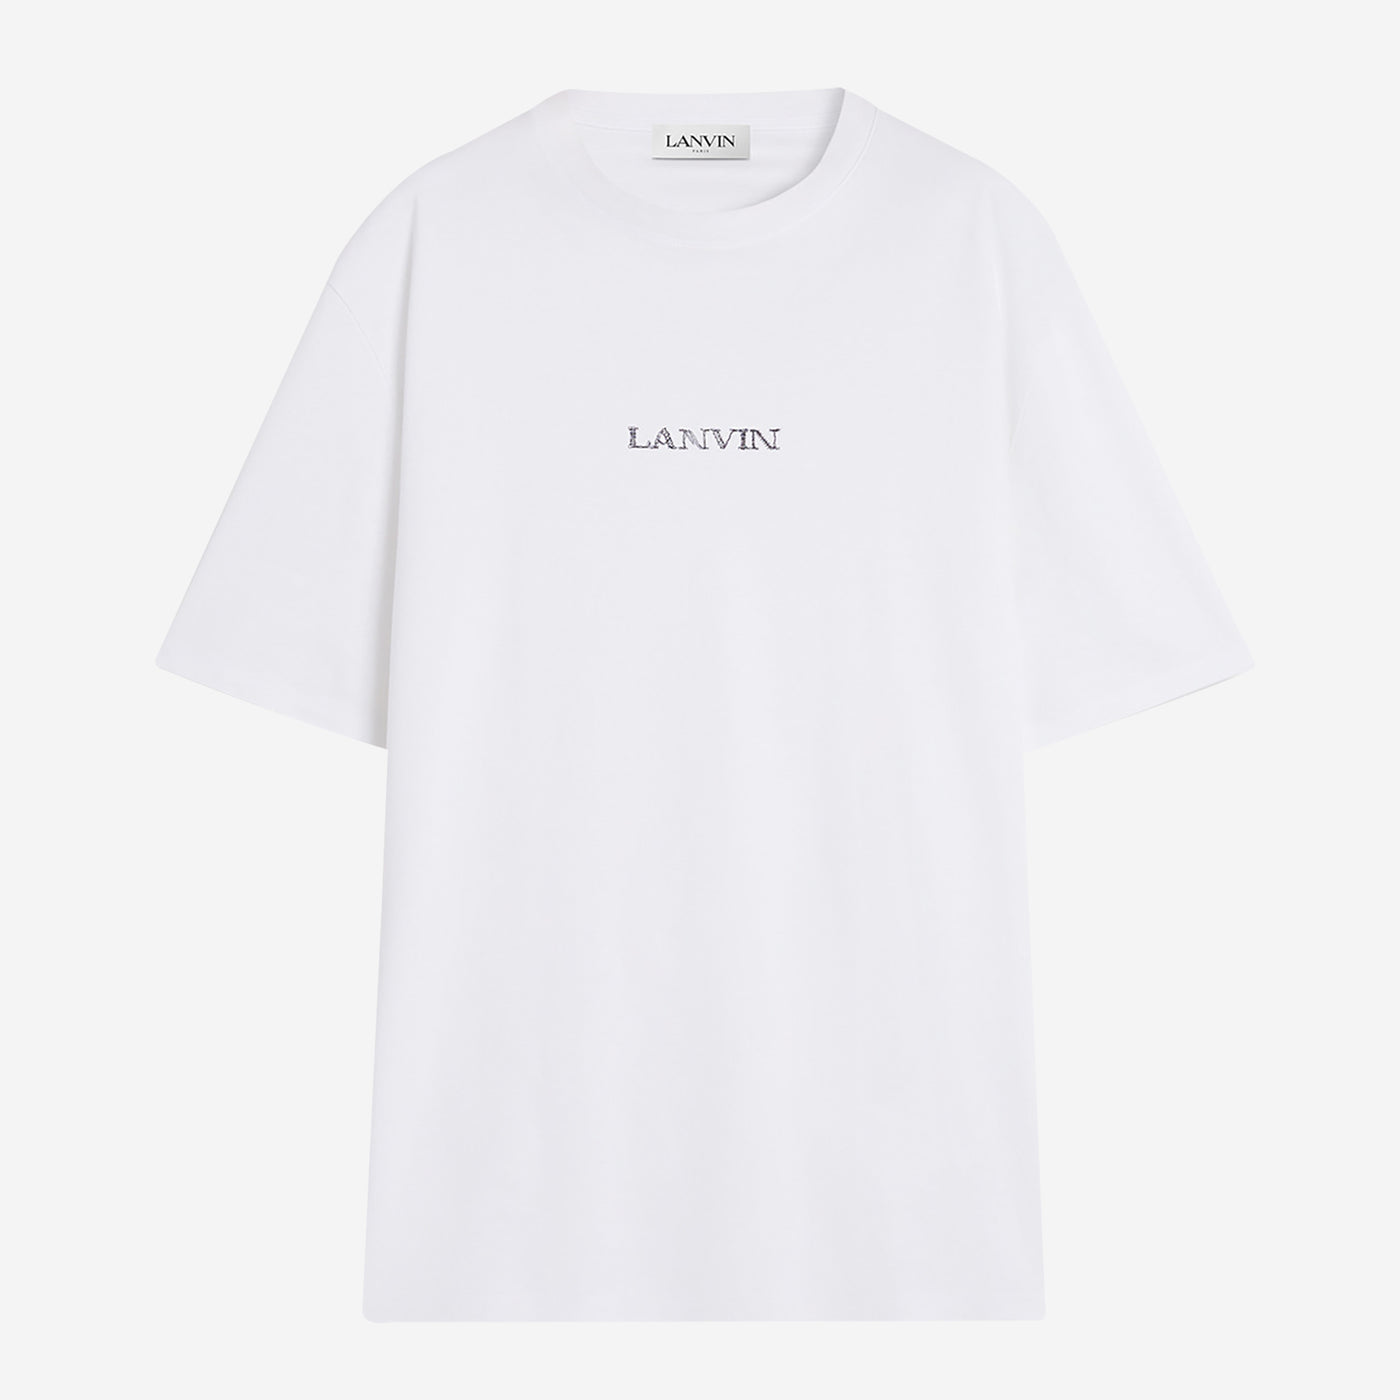 Lanvin Logo Classic T-Shirt